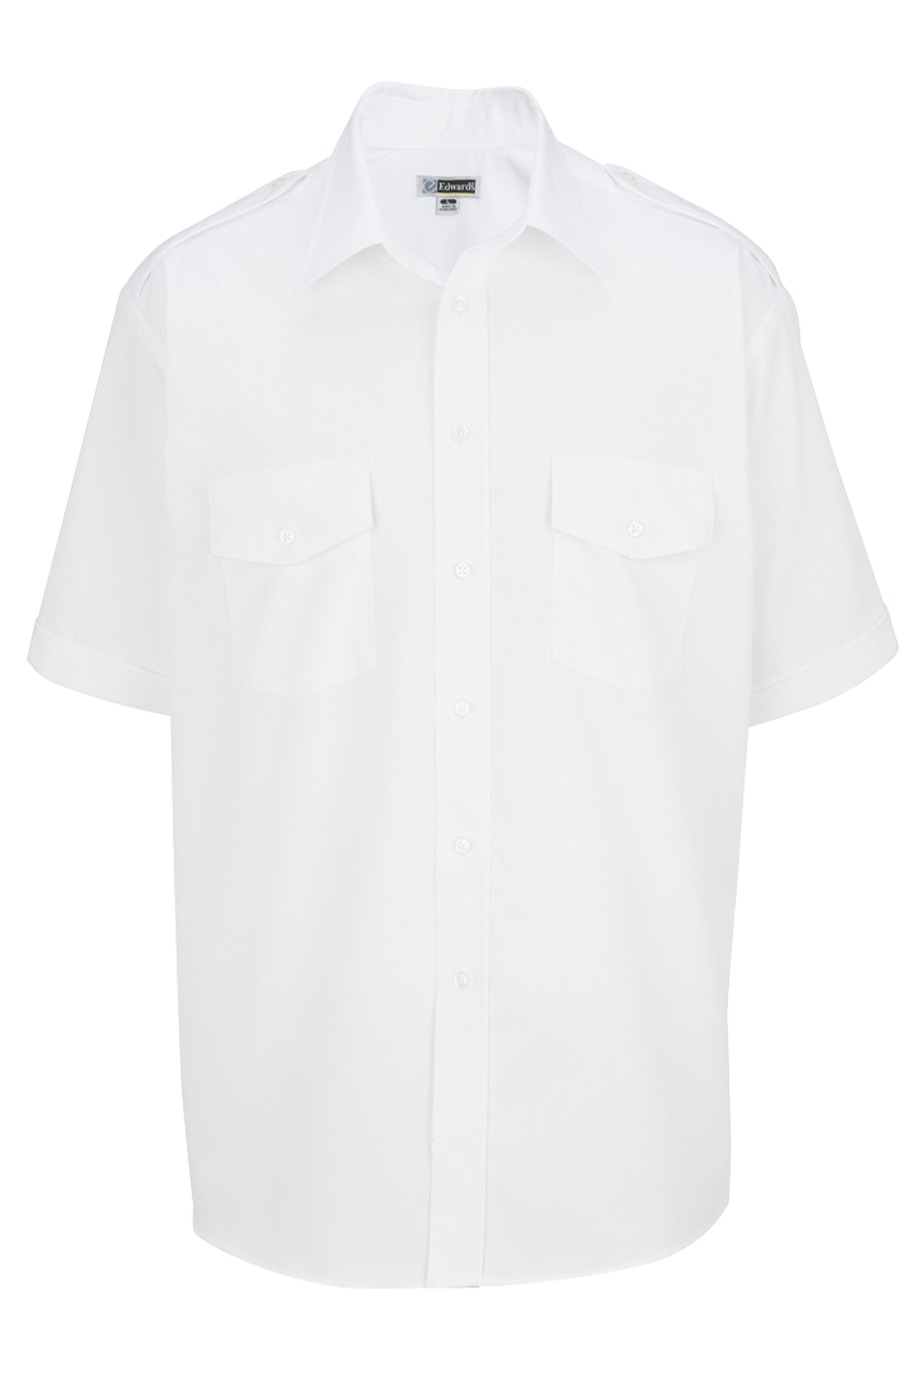 Edwards Garment 1212 - Men's Short Sleeve Navigator Shirt